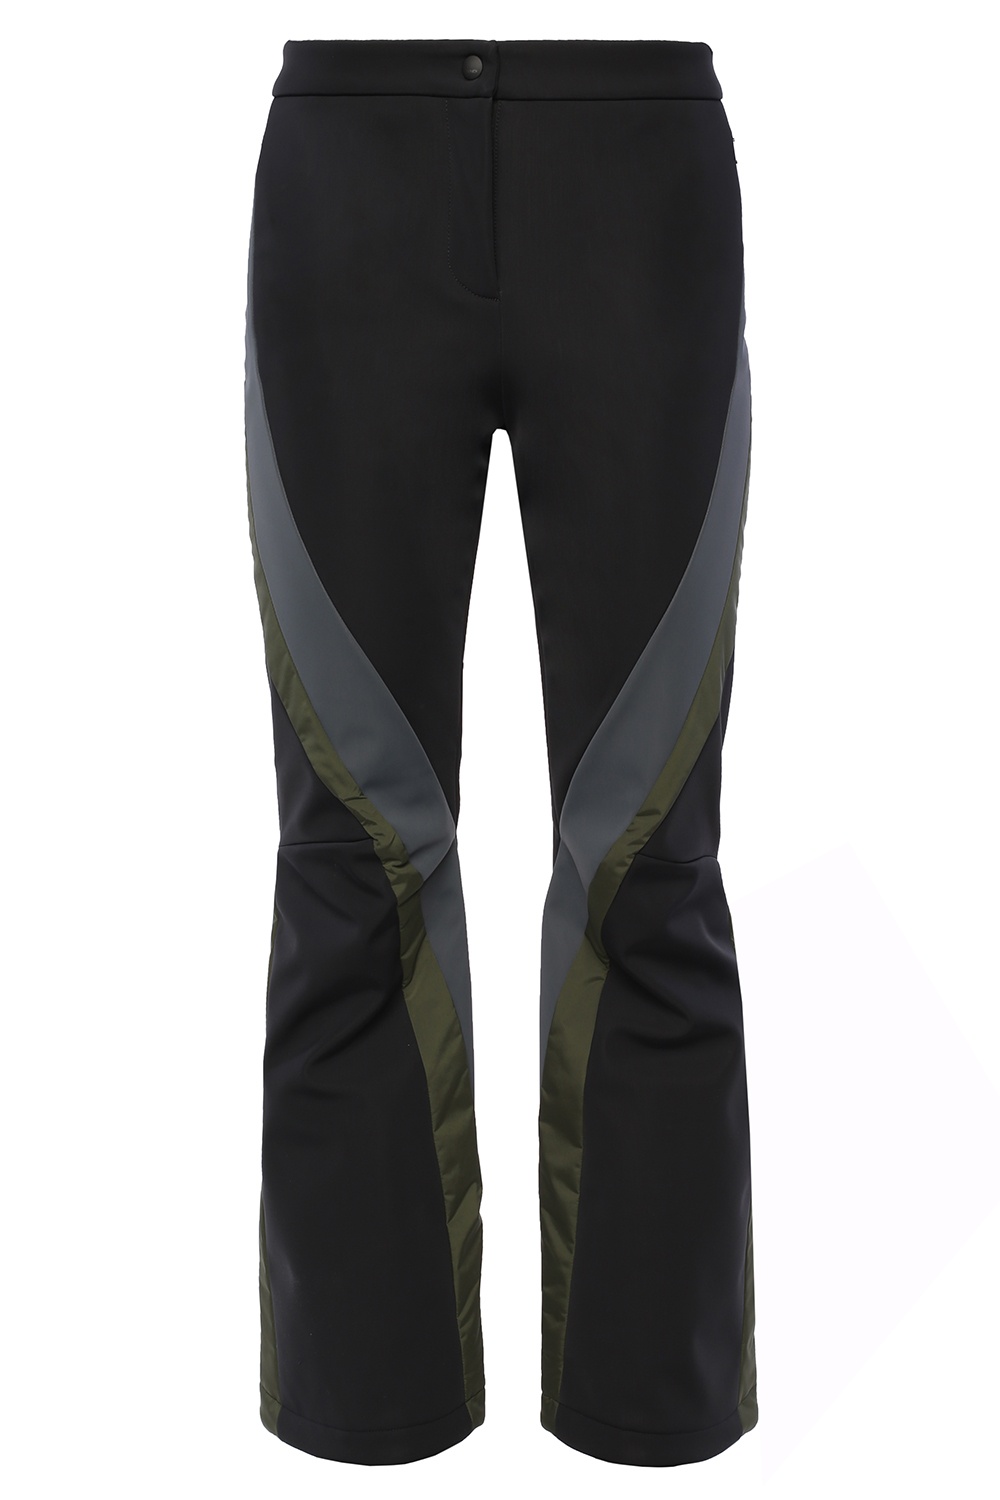 Fendi Ski trousers, Women's Clothing